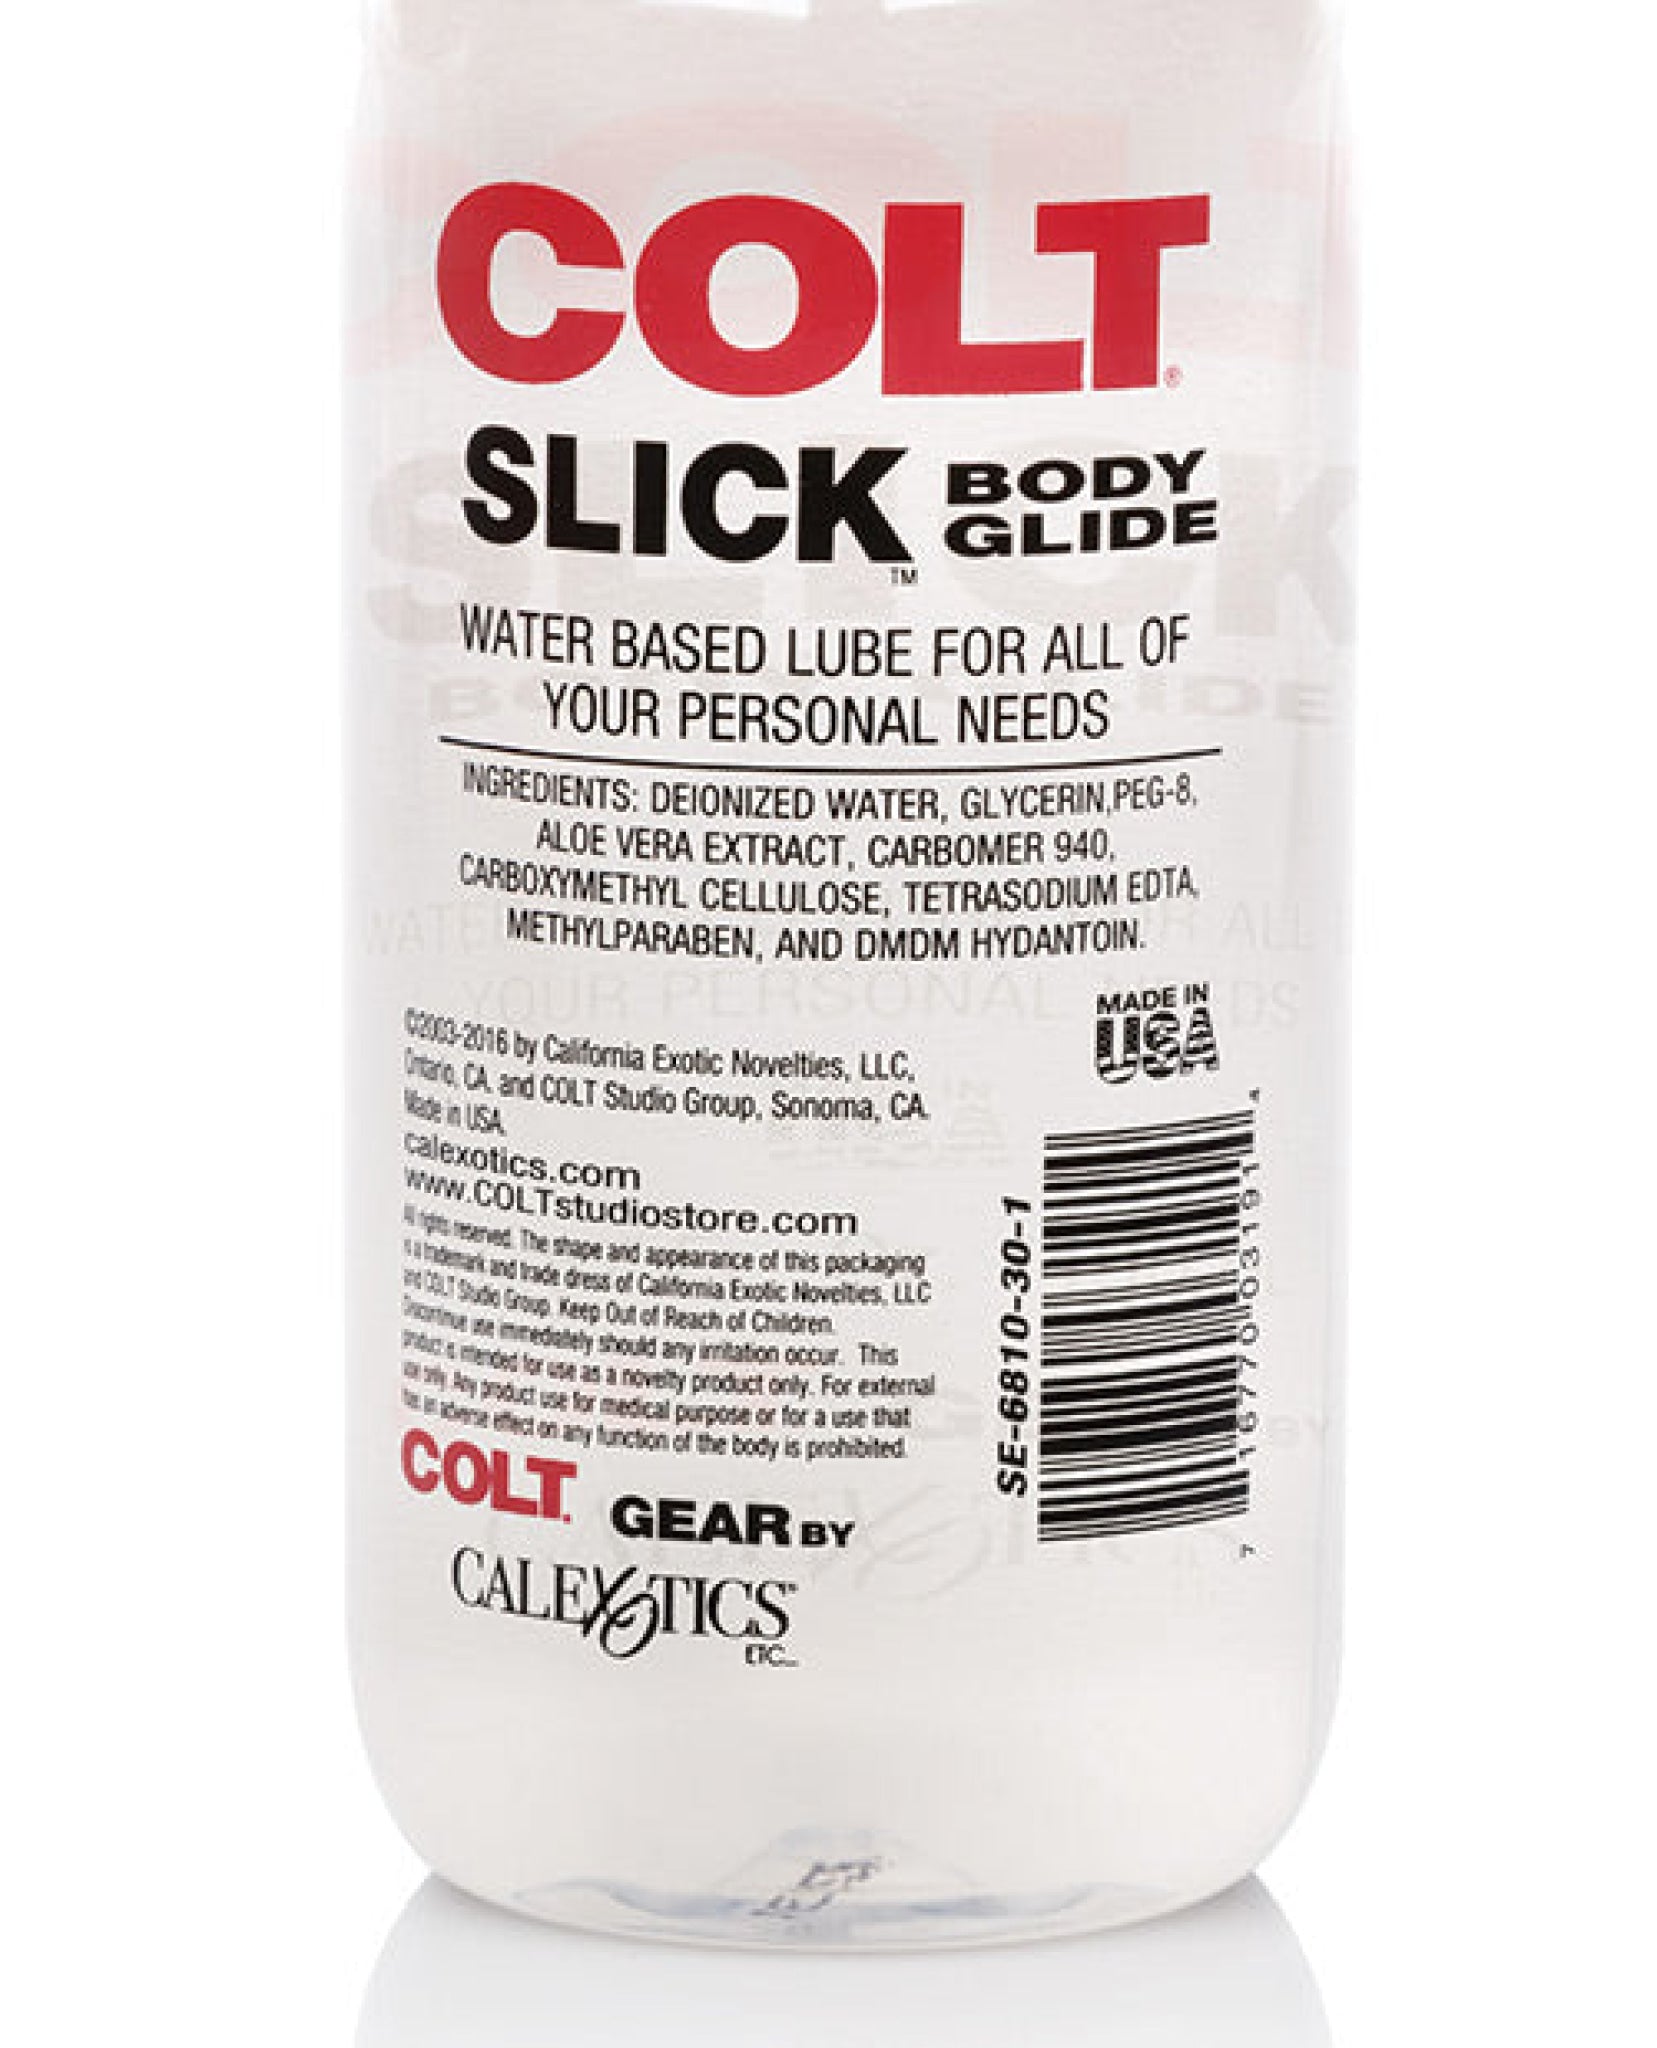 Colt Slick Body Glide - 16.57 Oz California Exotic Novelties